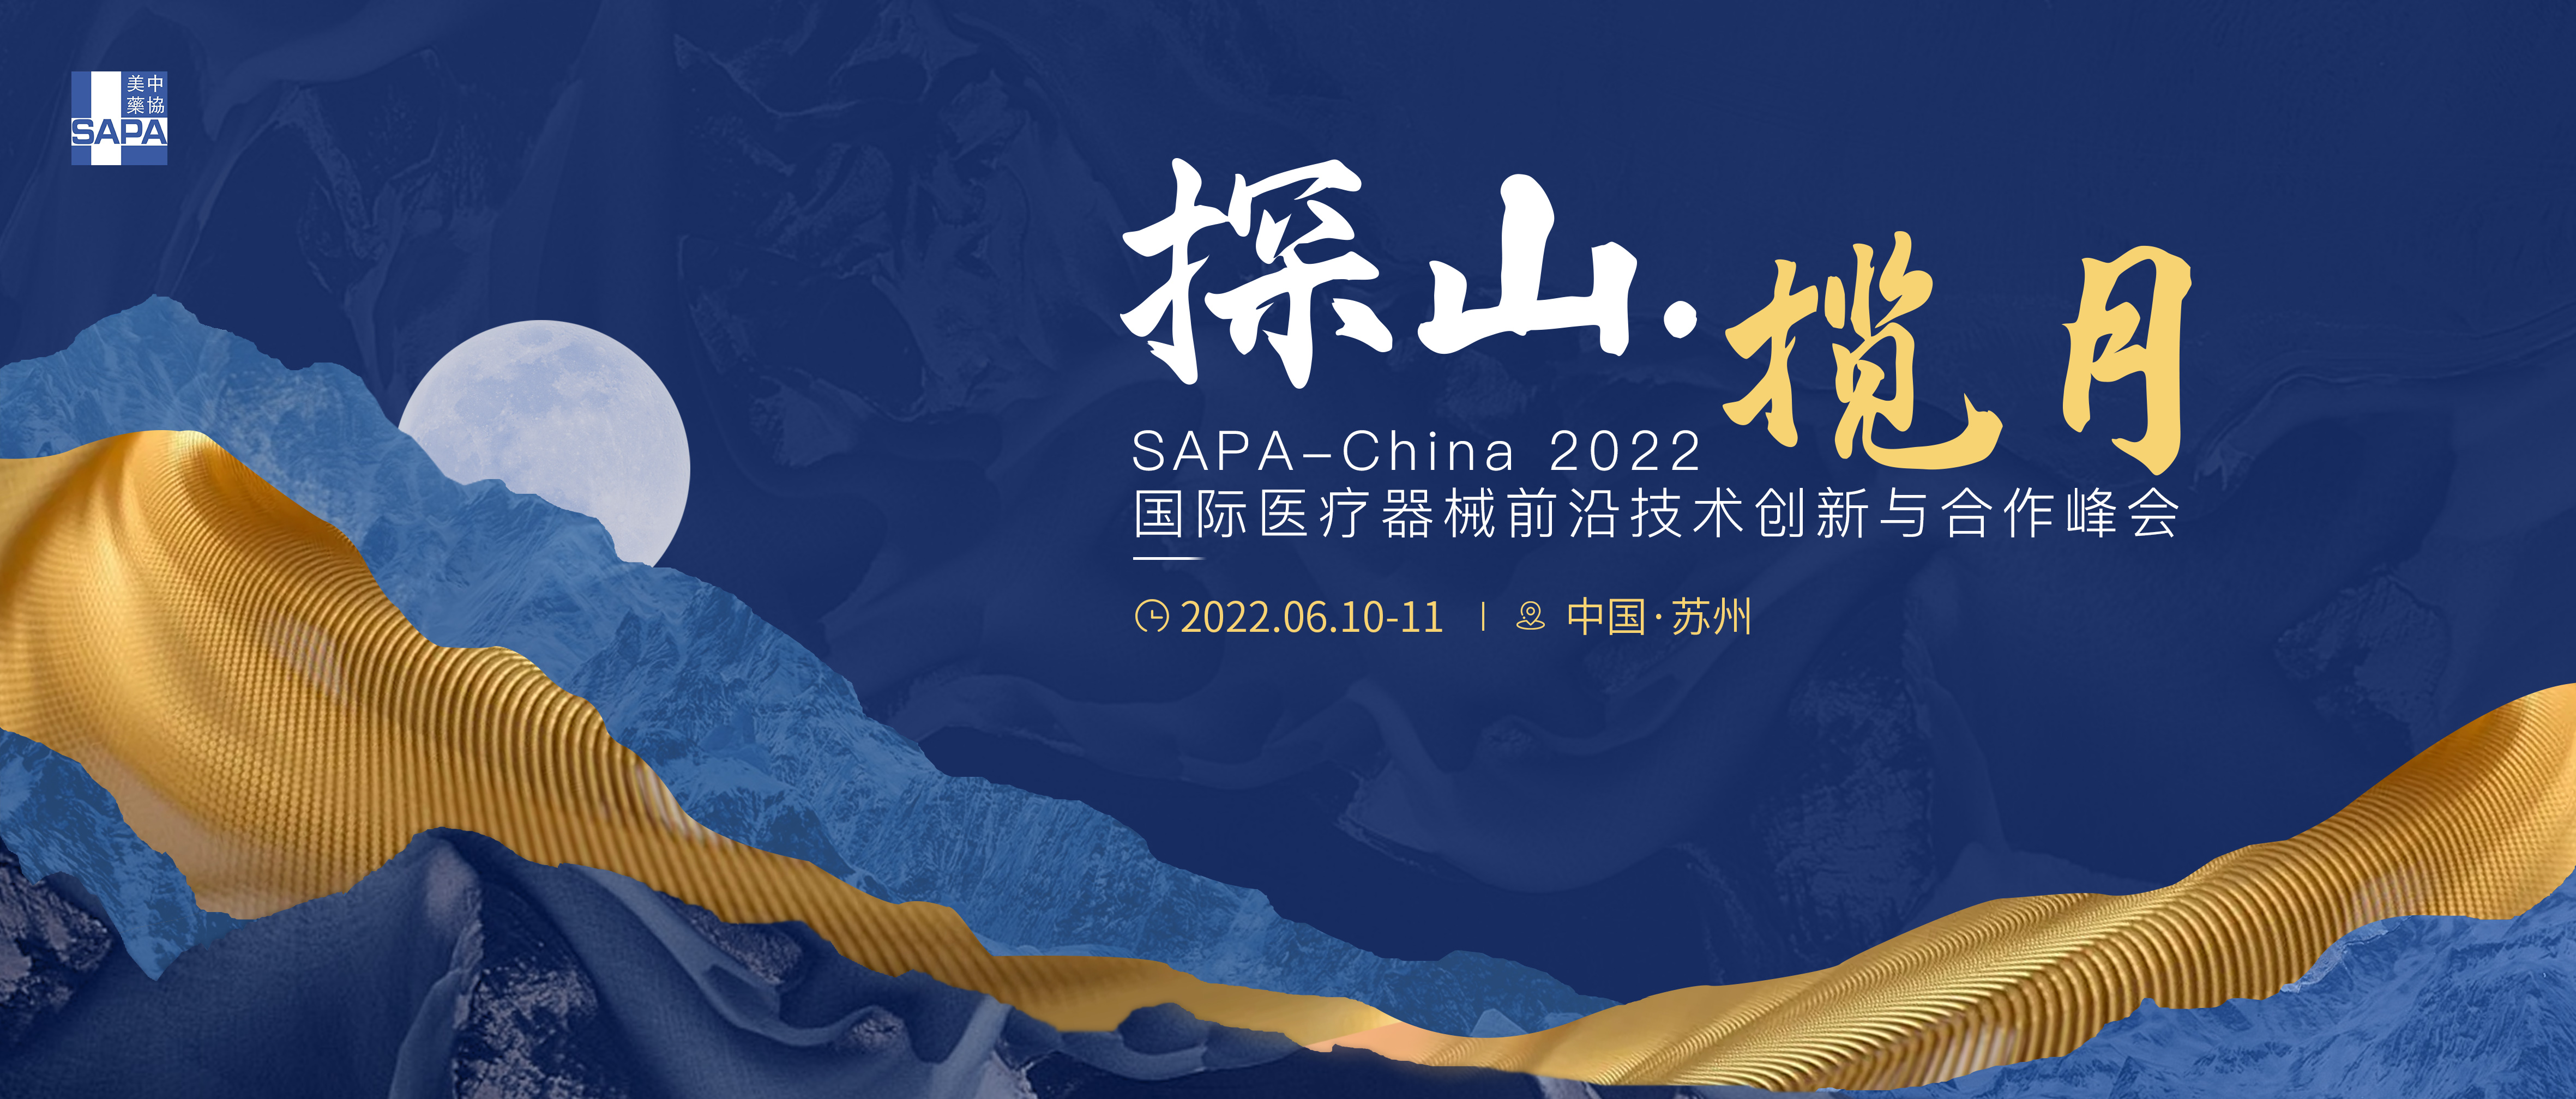 SAPA-China 2022国际医疗器械前沿技术创新与合作峰会